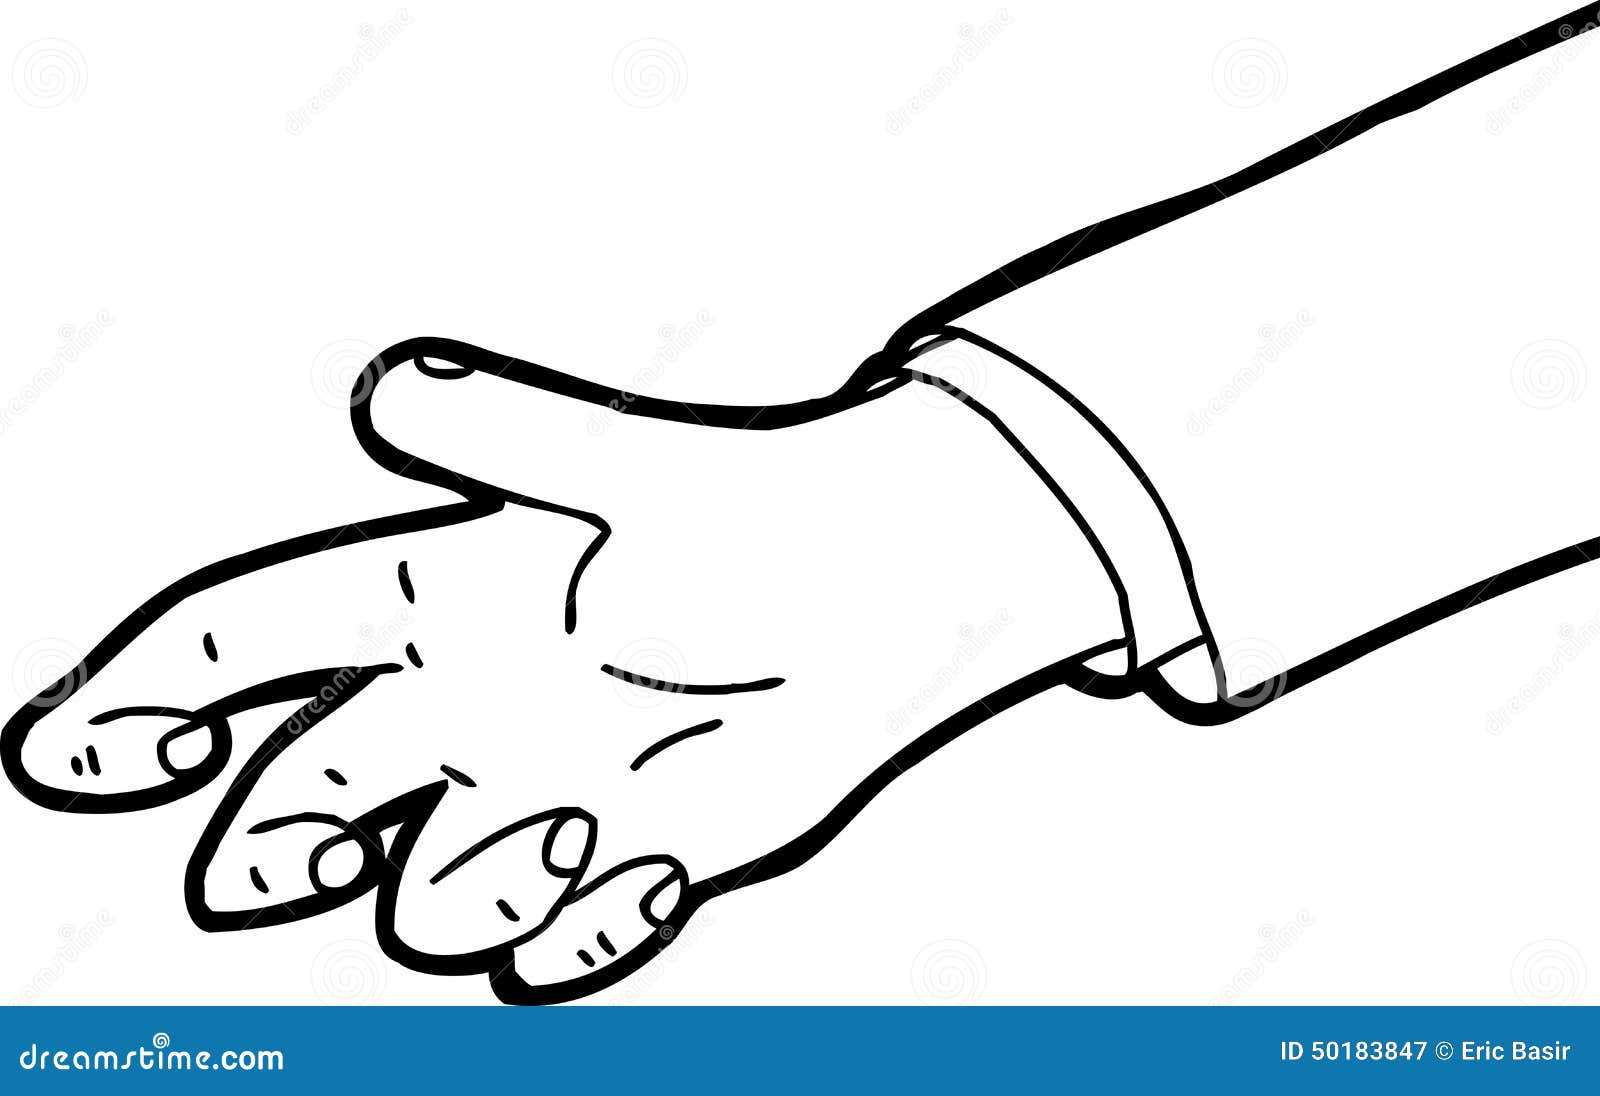 Outline of Grabbing Hand stock illustration. Illustration of hand - 50183847